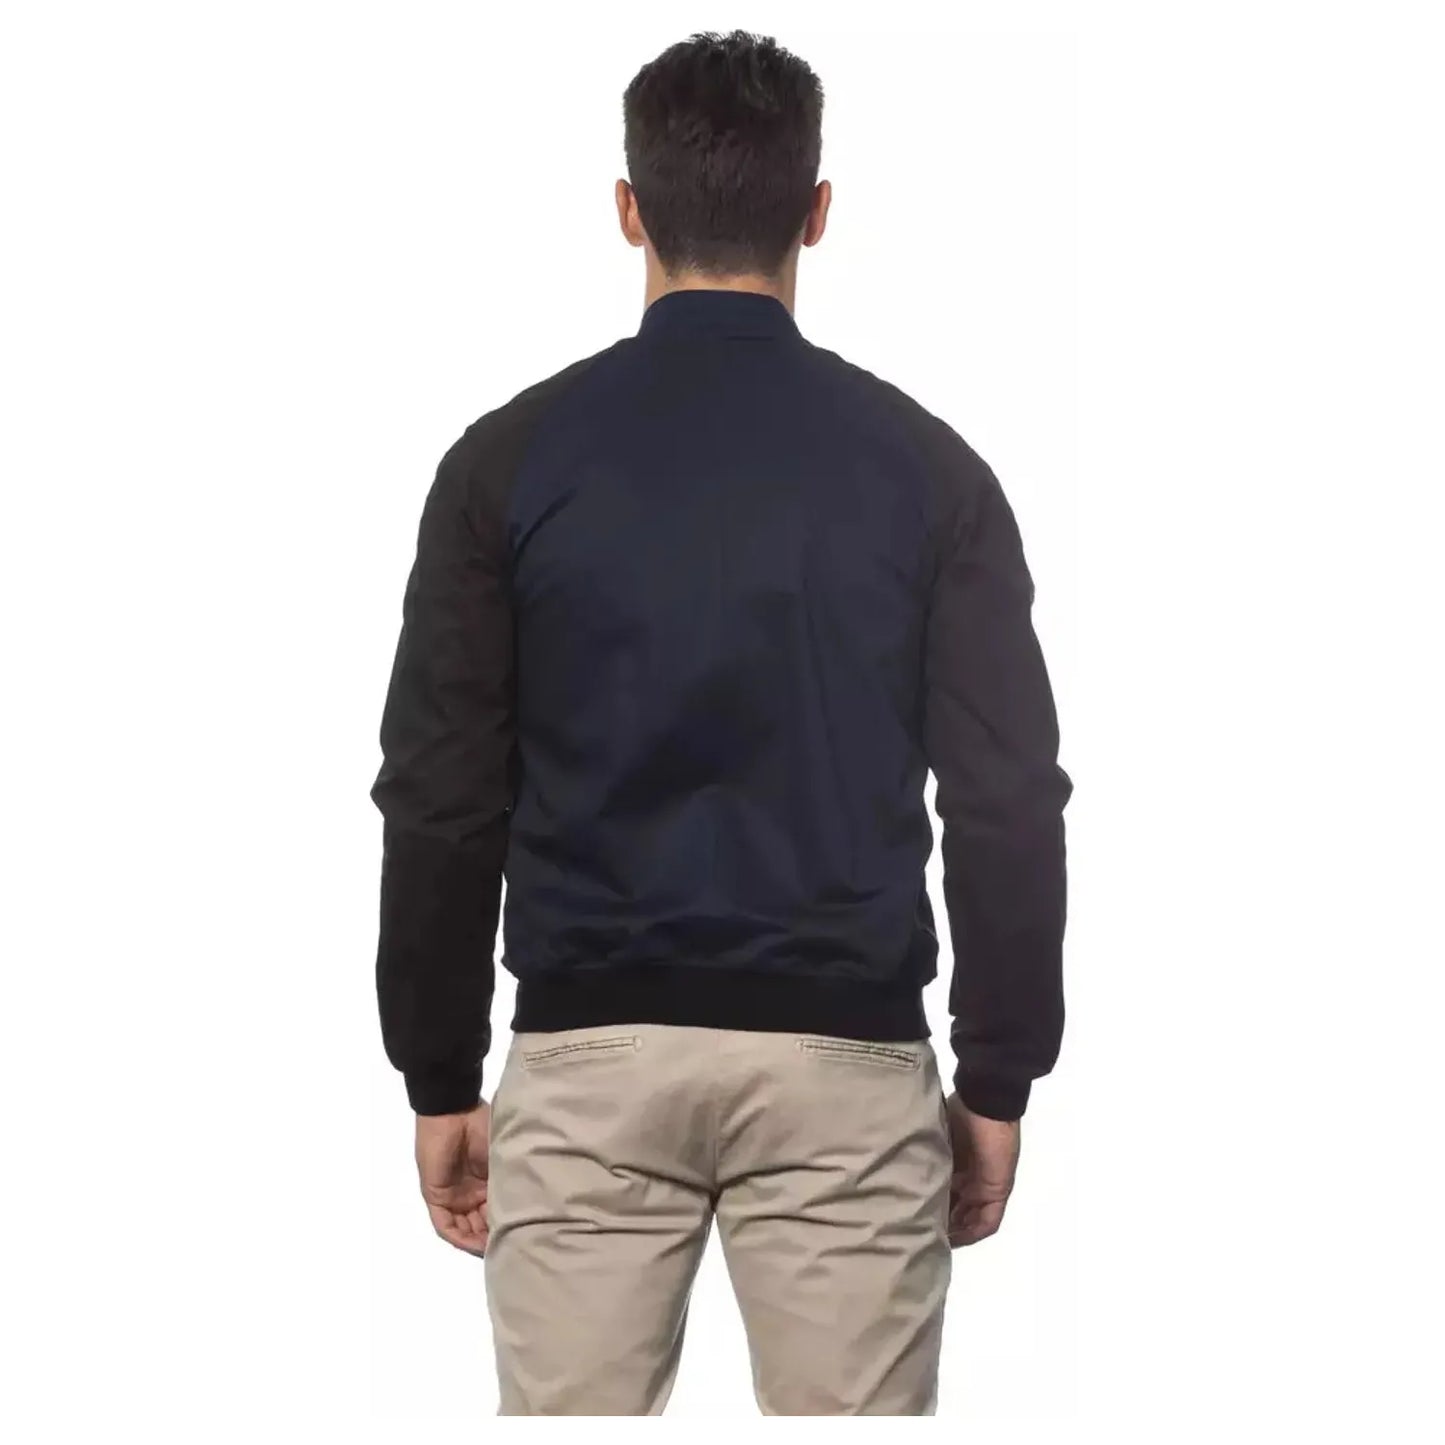 Verri Sleek Blue Bomber Jacket - Men's Couture Coats & Jackets blu-jacket-1 stock_product_image_18318_550184366-15-066b8ea7-3e6.webp